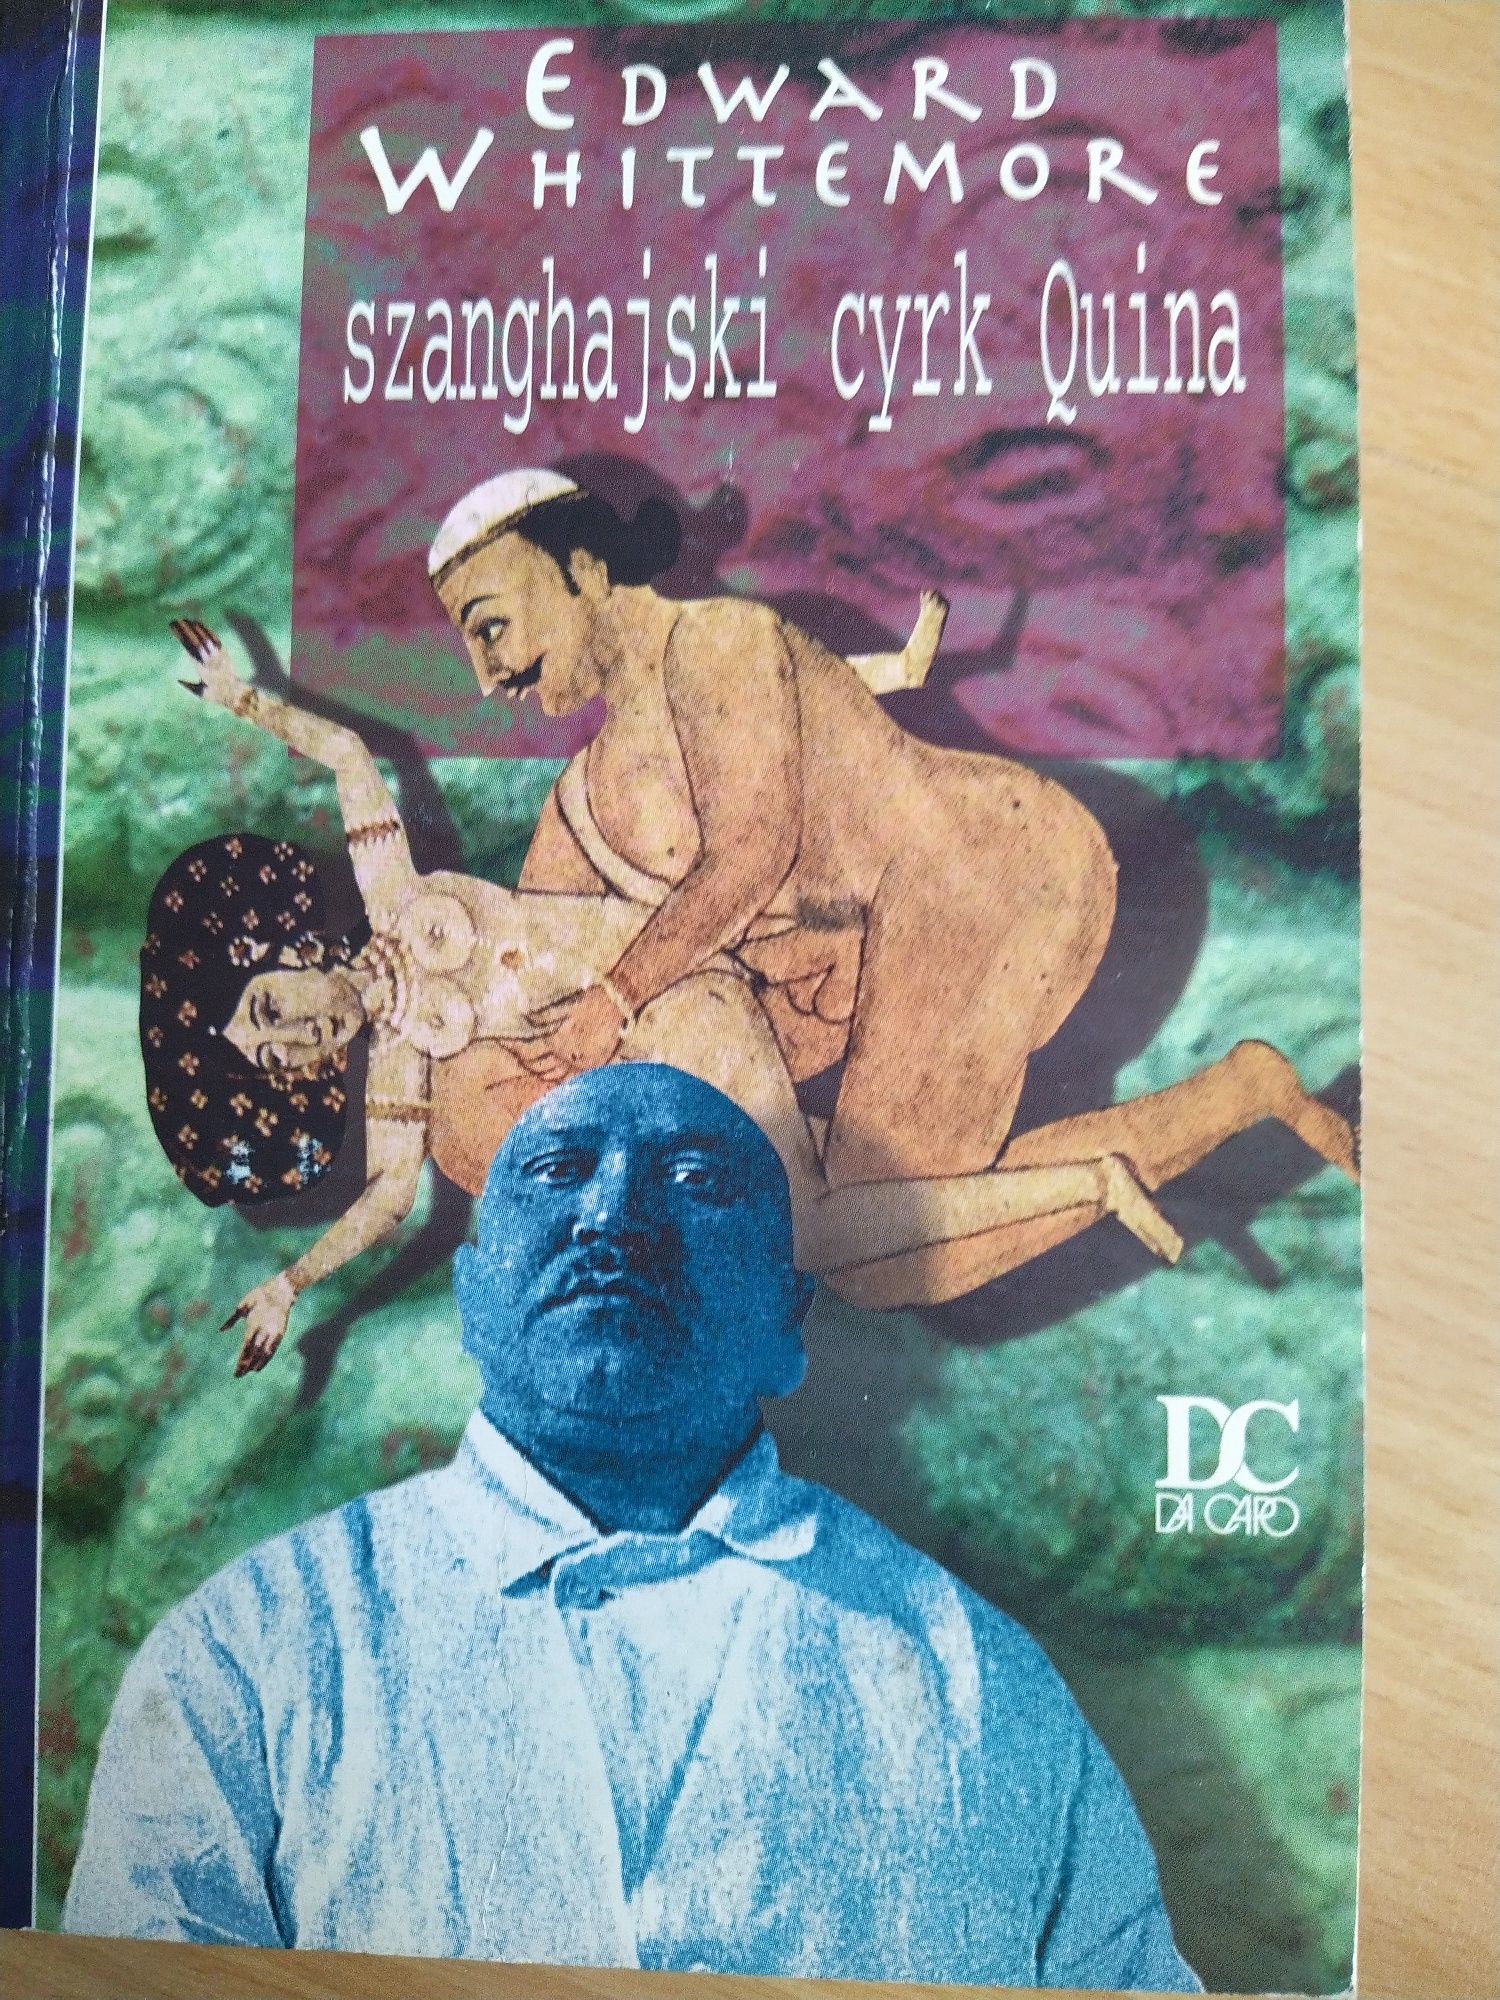 "Szanghajski cyrk Quinoa" Edward Whittemore